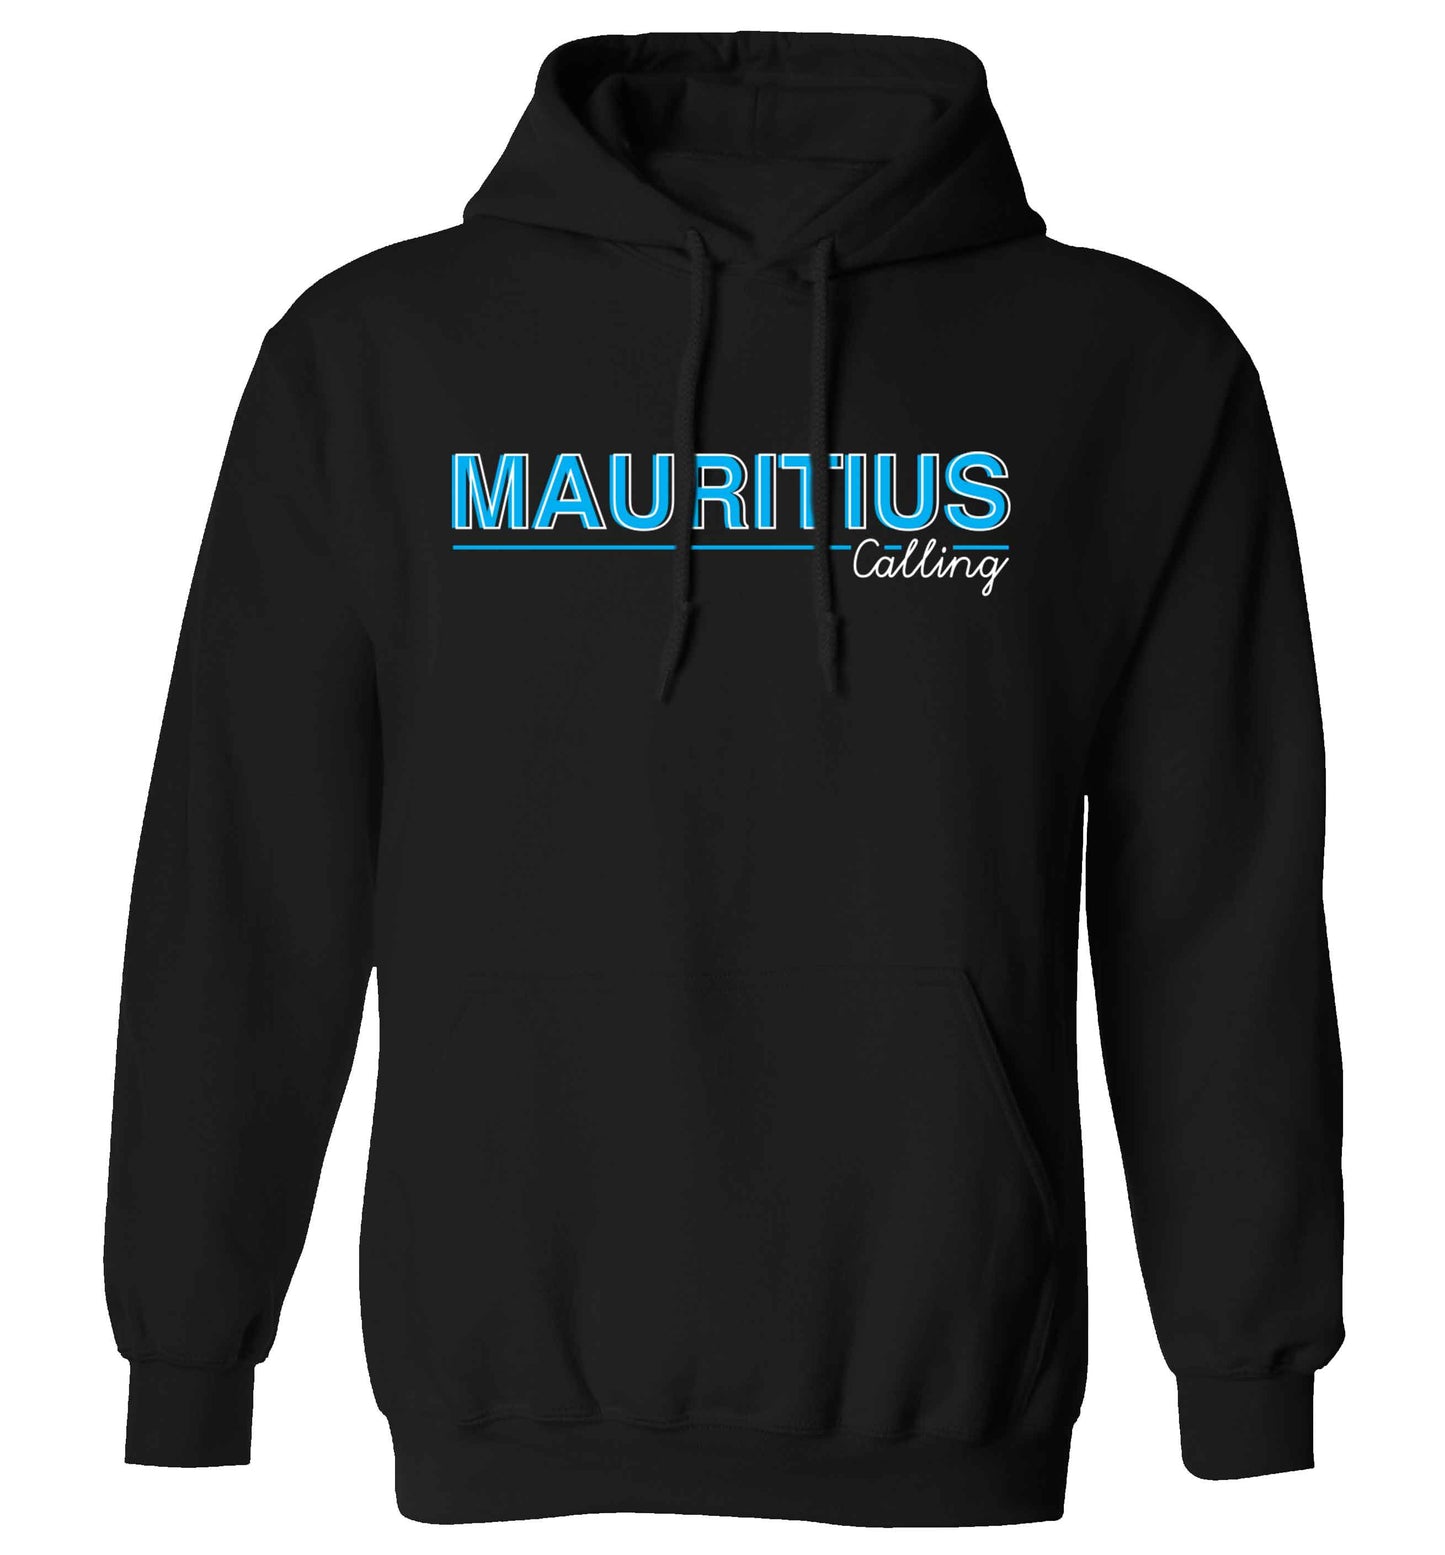 Mauritius calling adults unisex black hoodie 2XL